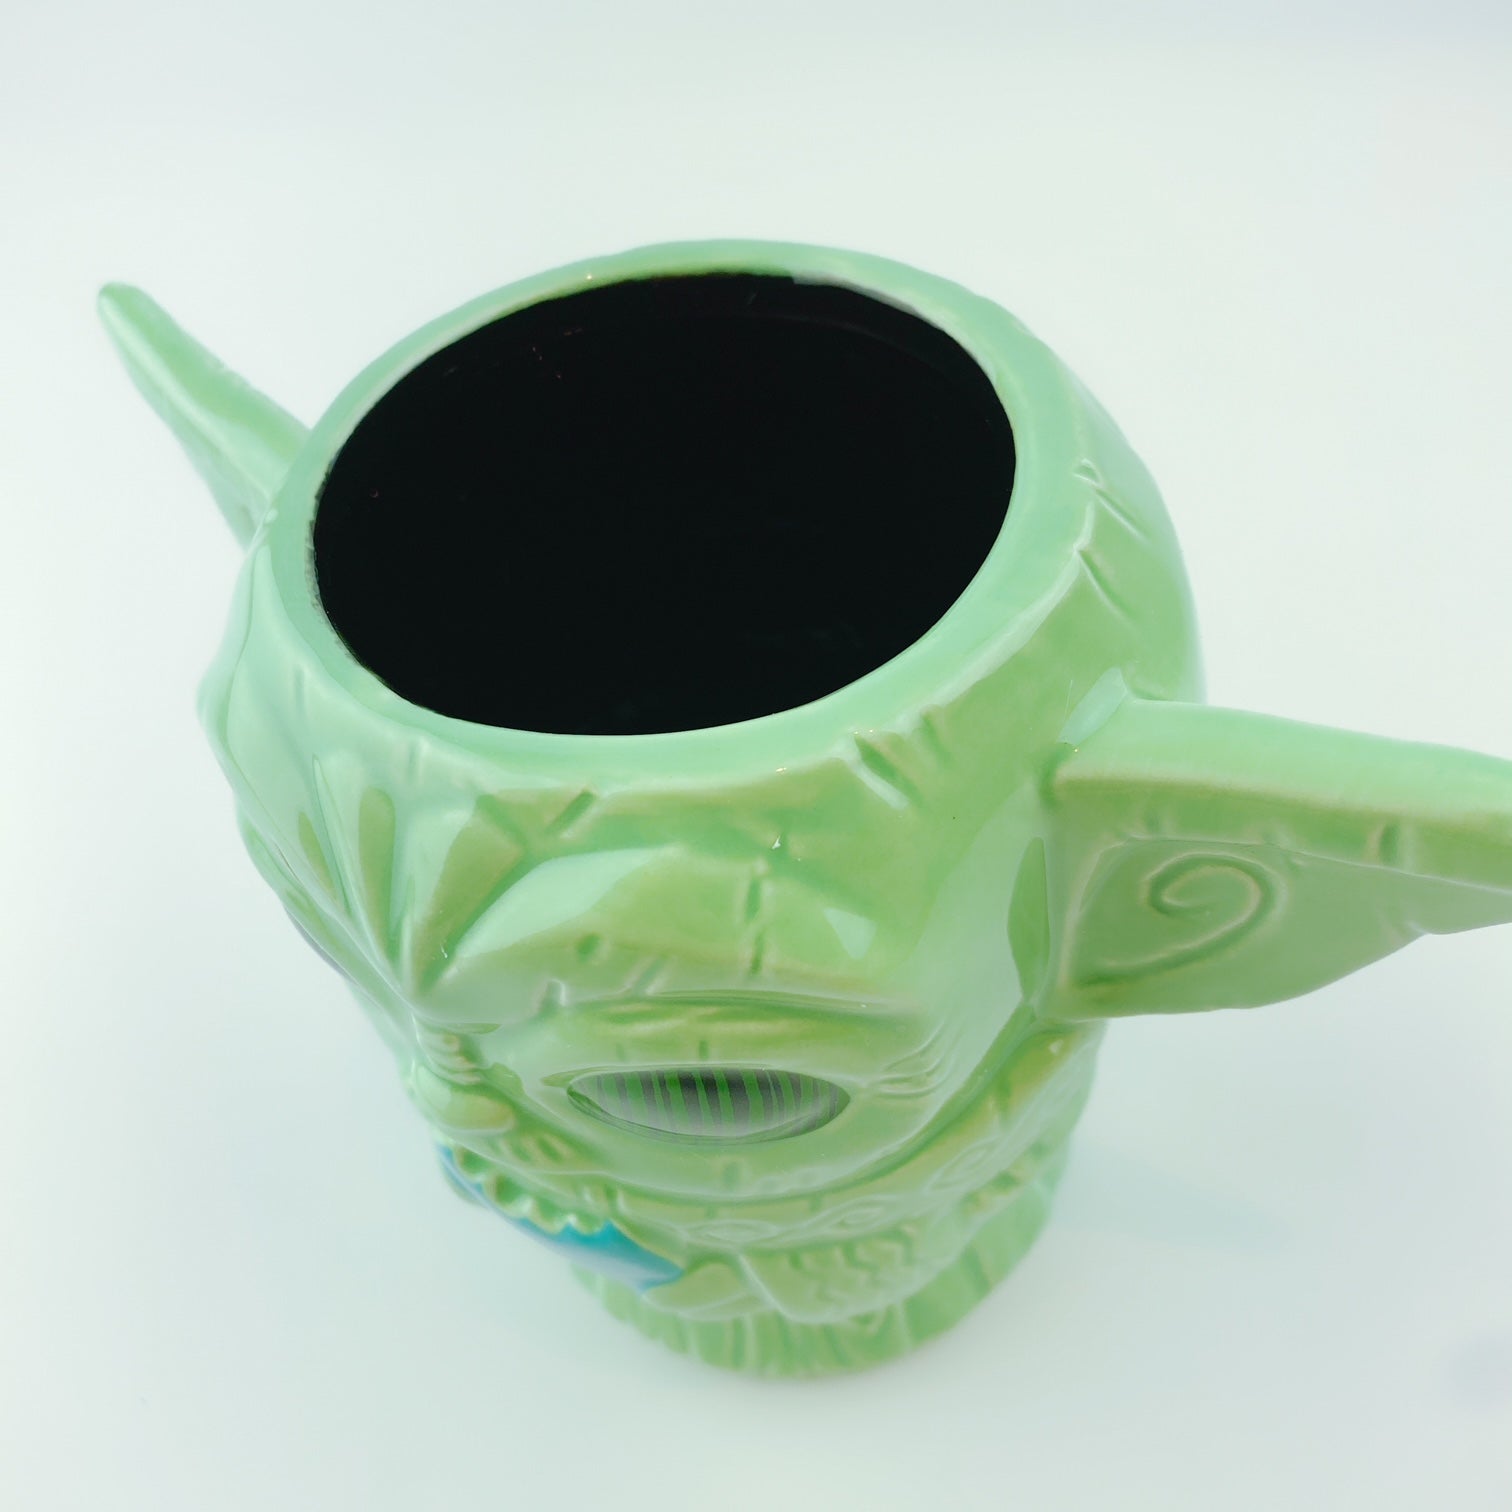 Geeki Tiki Mandalorian Season 2 Scenic Ceramic Mug